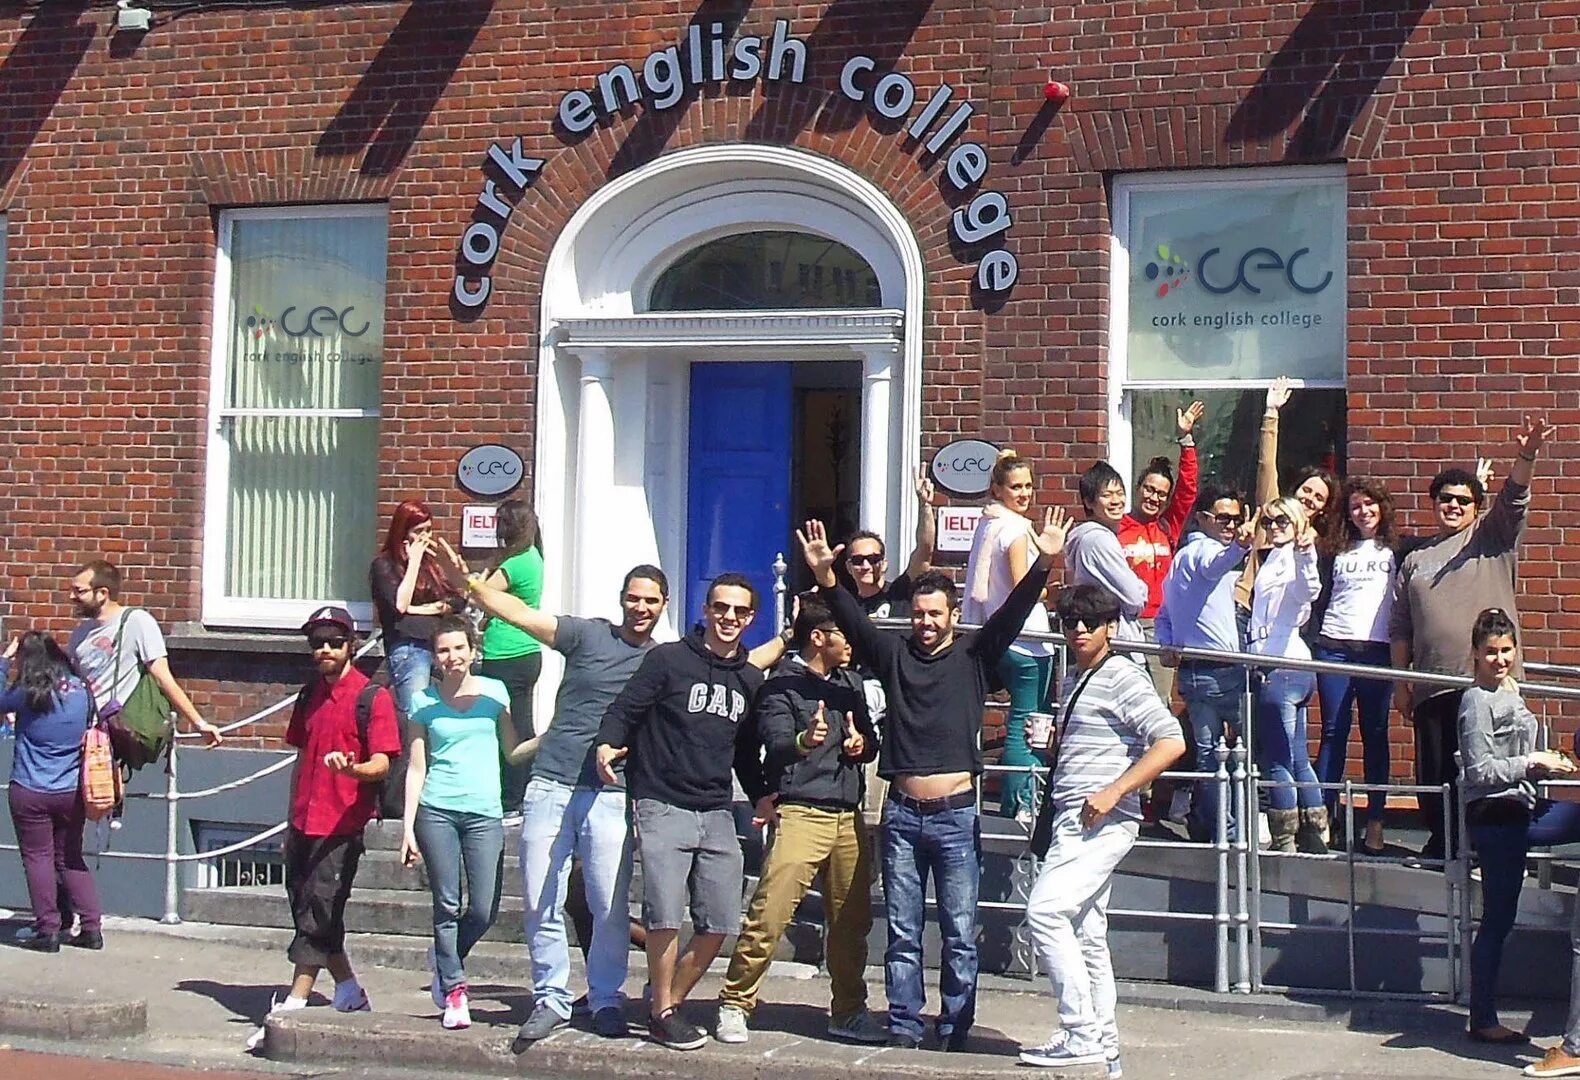 Английский колледж после 9. Английский для колледжей. Ирландский колледж Корк. Cork English College. Школа в Ирландии.